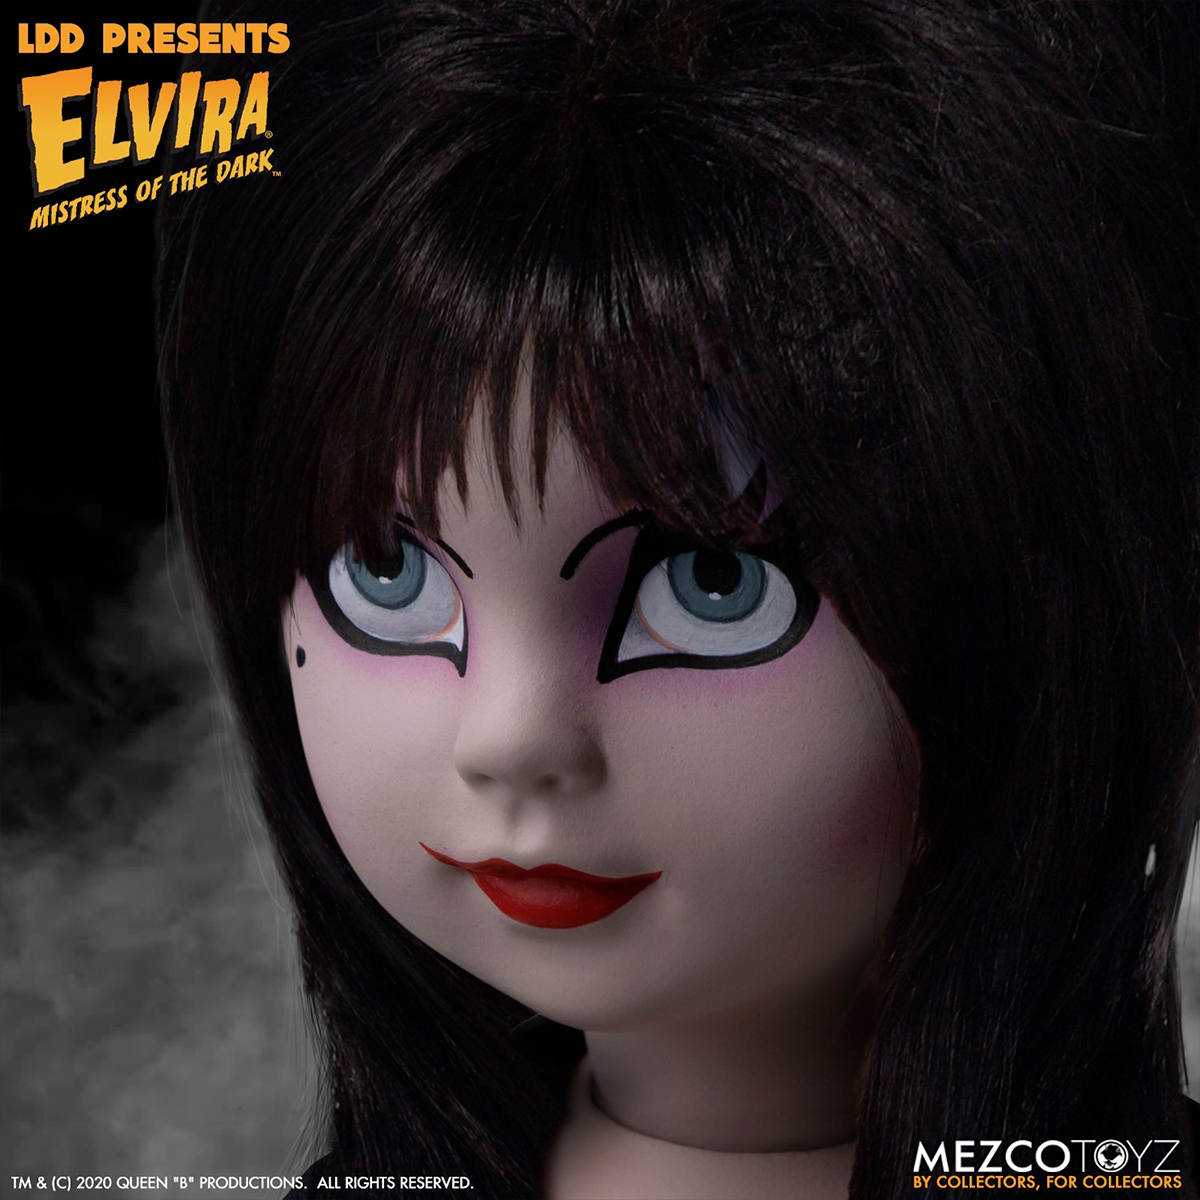 Boneca LDD Presents Elvira Mistress of the Dark